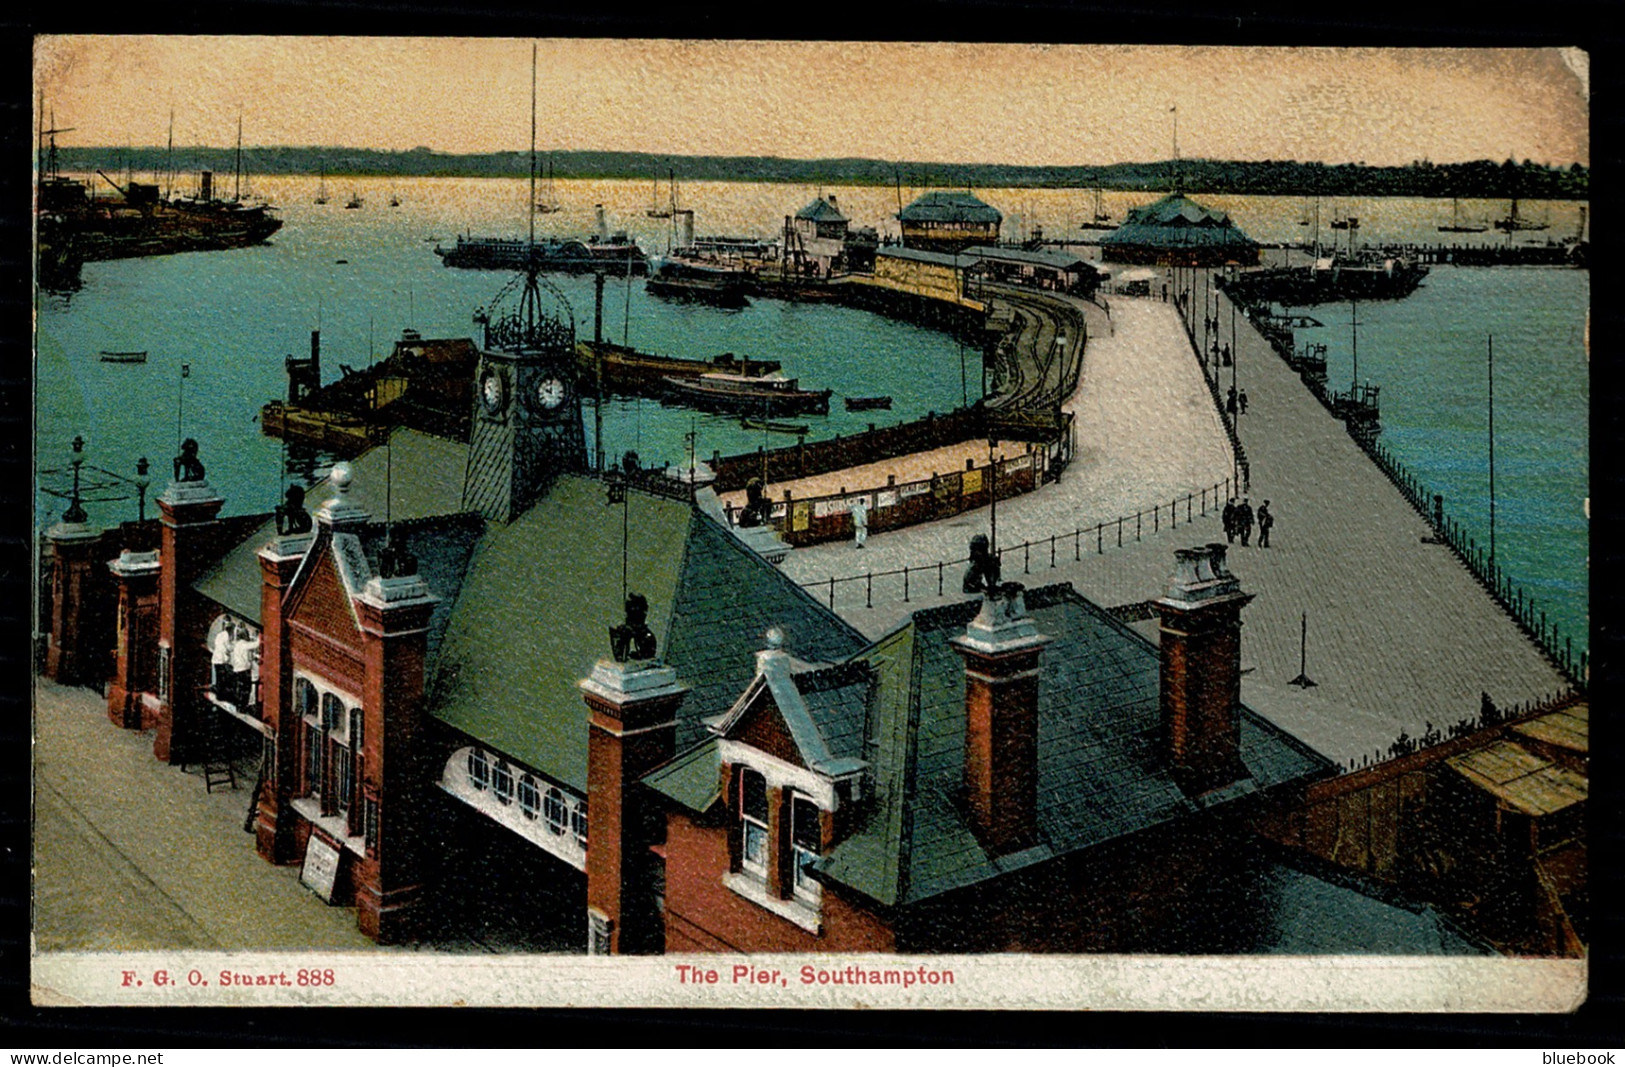 Ref 1621 - Early FGO F.G.O. Stuart Postcard - The Pier Southampton No. 888 - Hampshire - Southampton